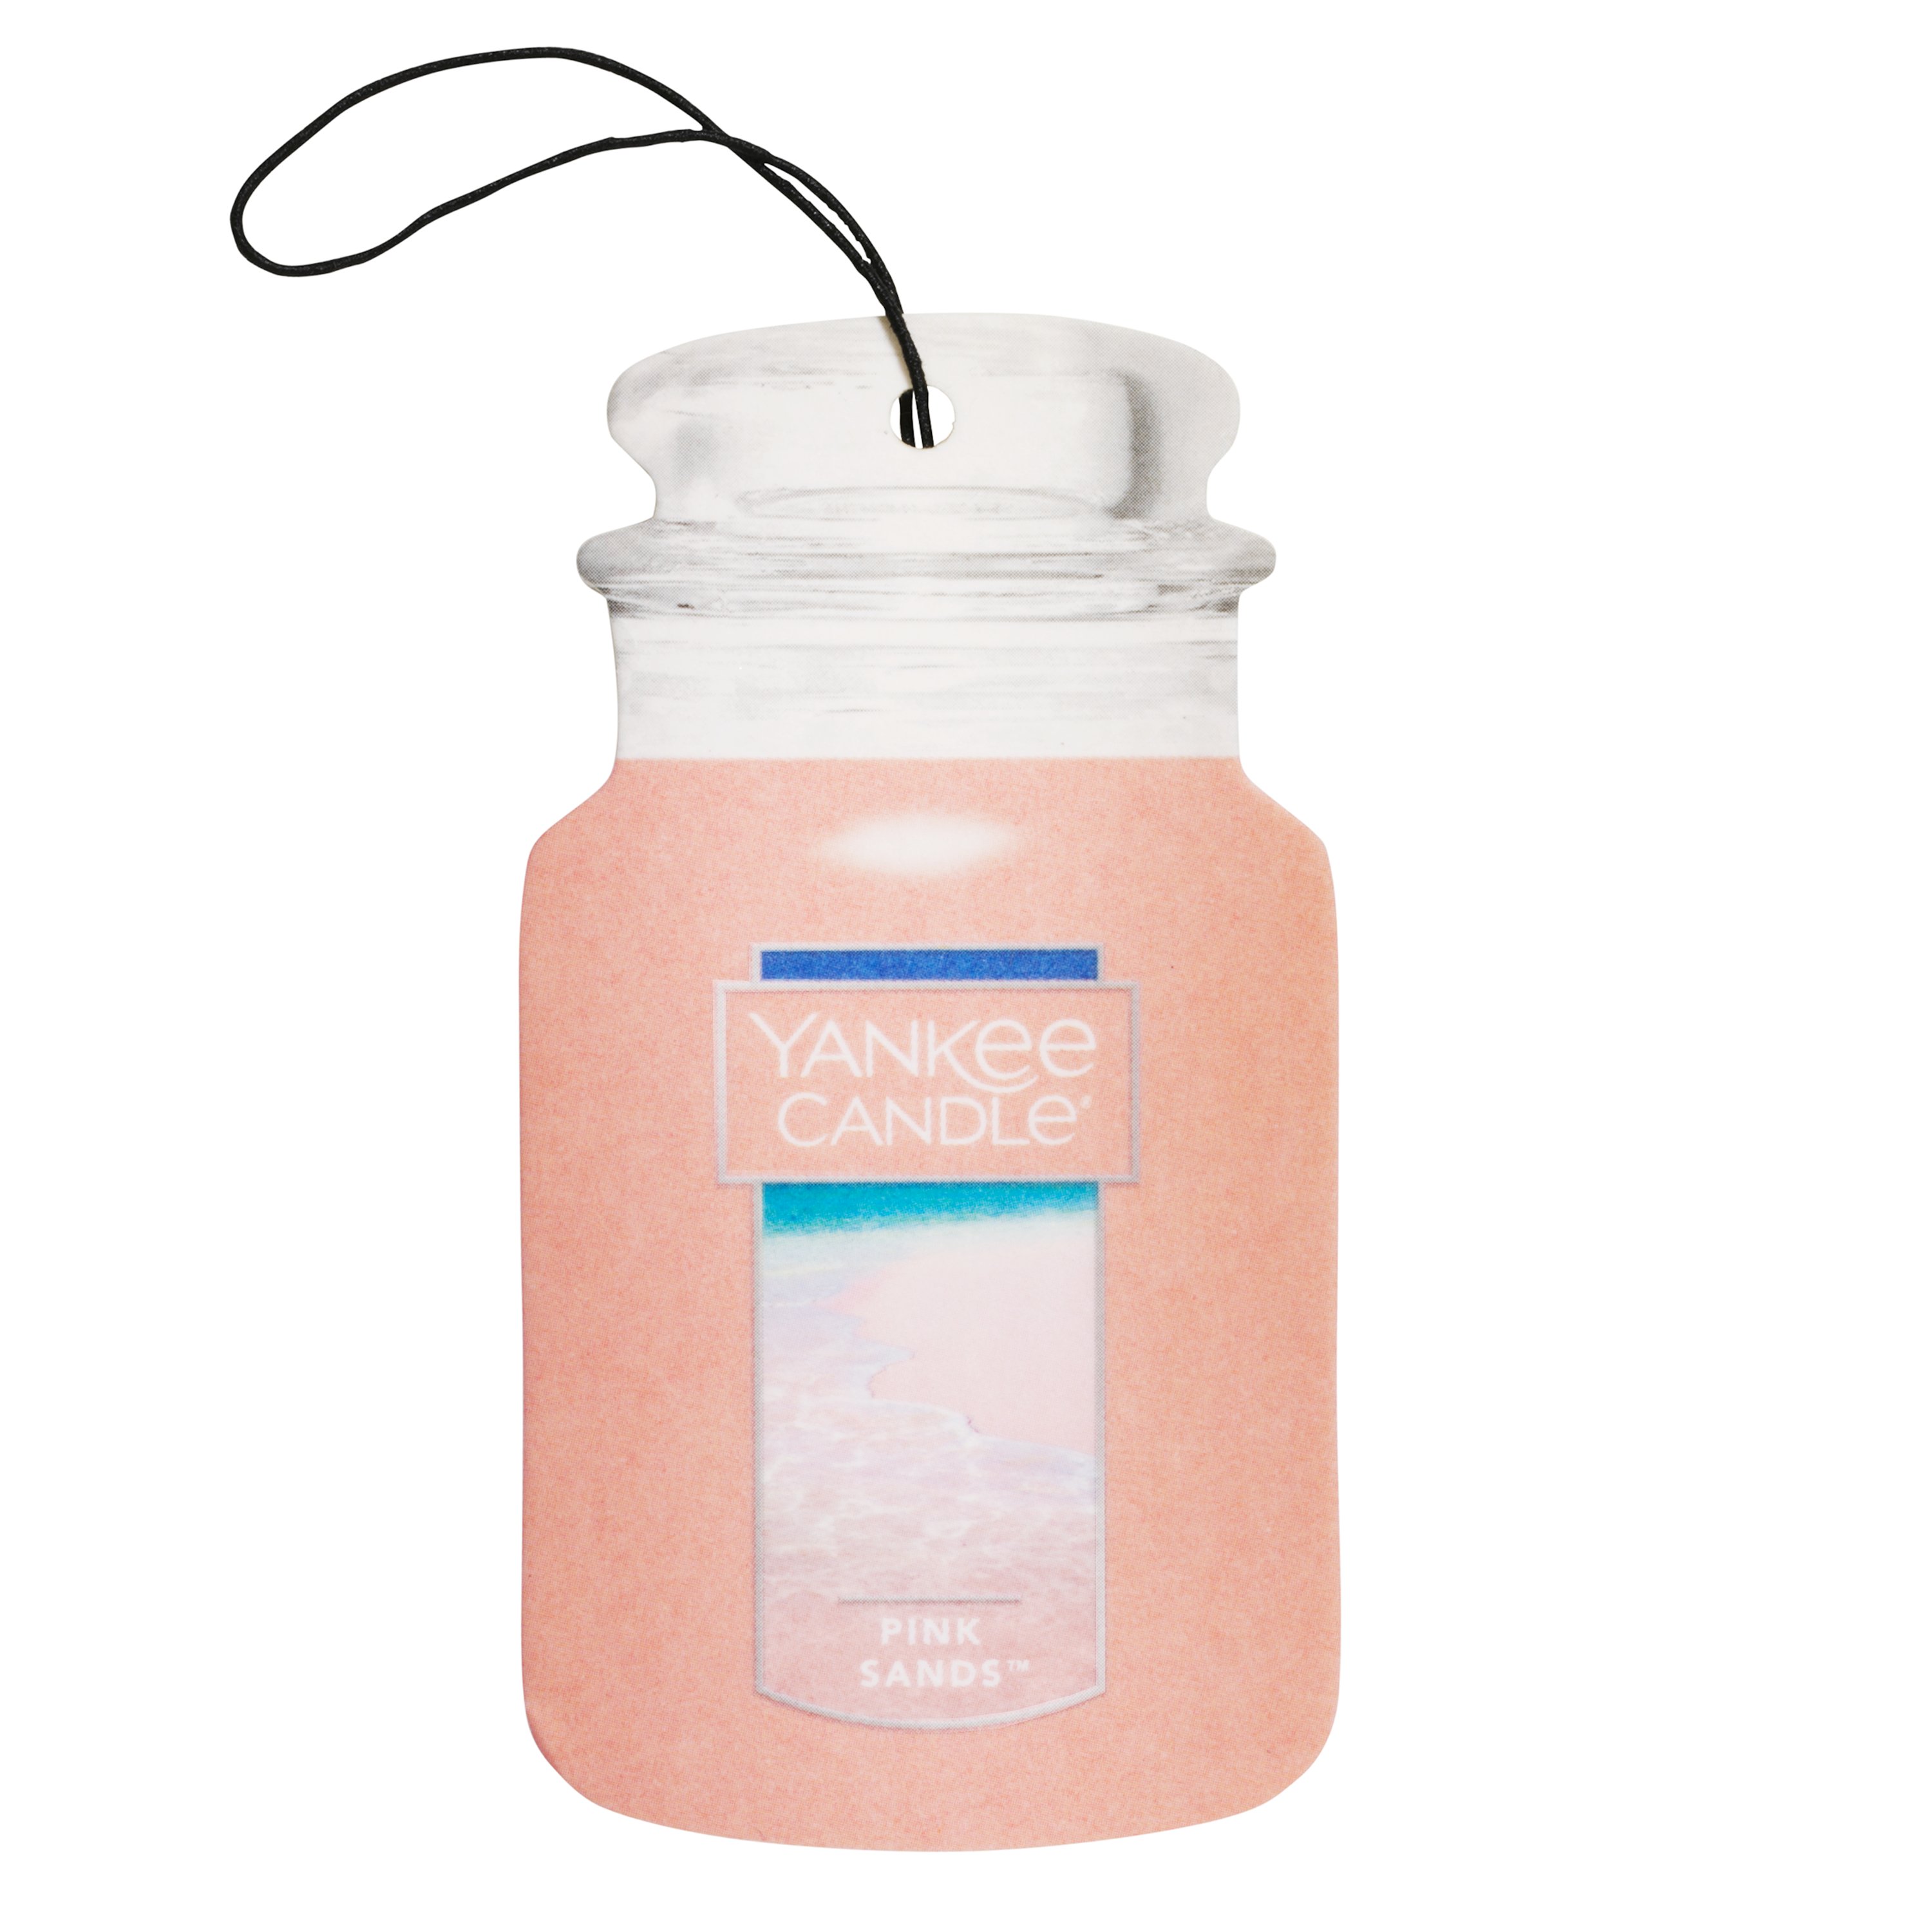 Yankee Candle Car Jar Air Freshener, Pink Sands